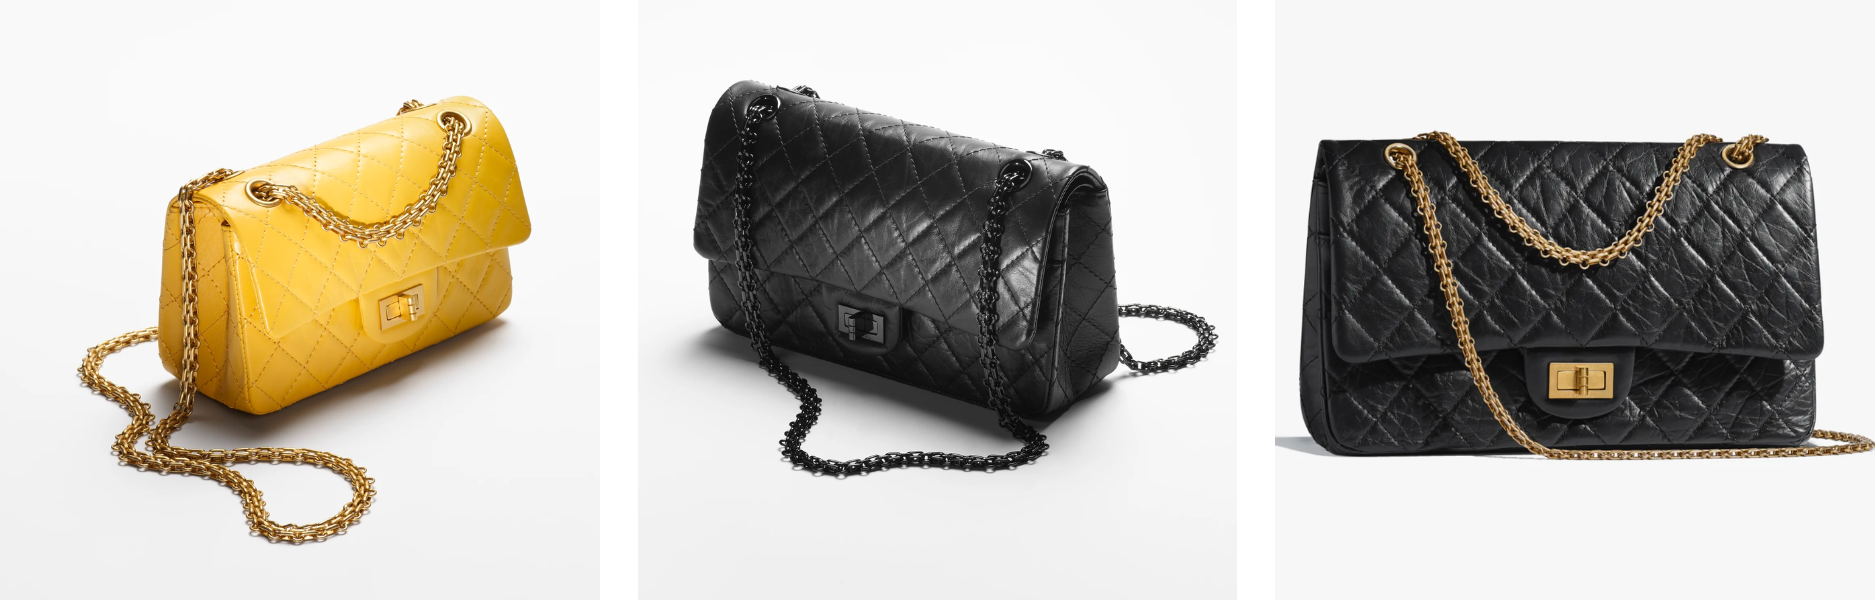 Elegant Chanel 2.55 Handbag